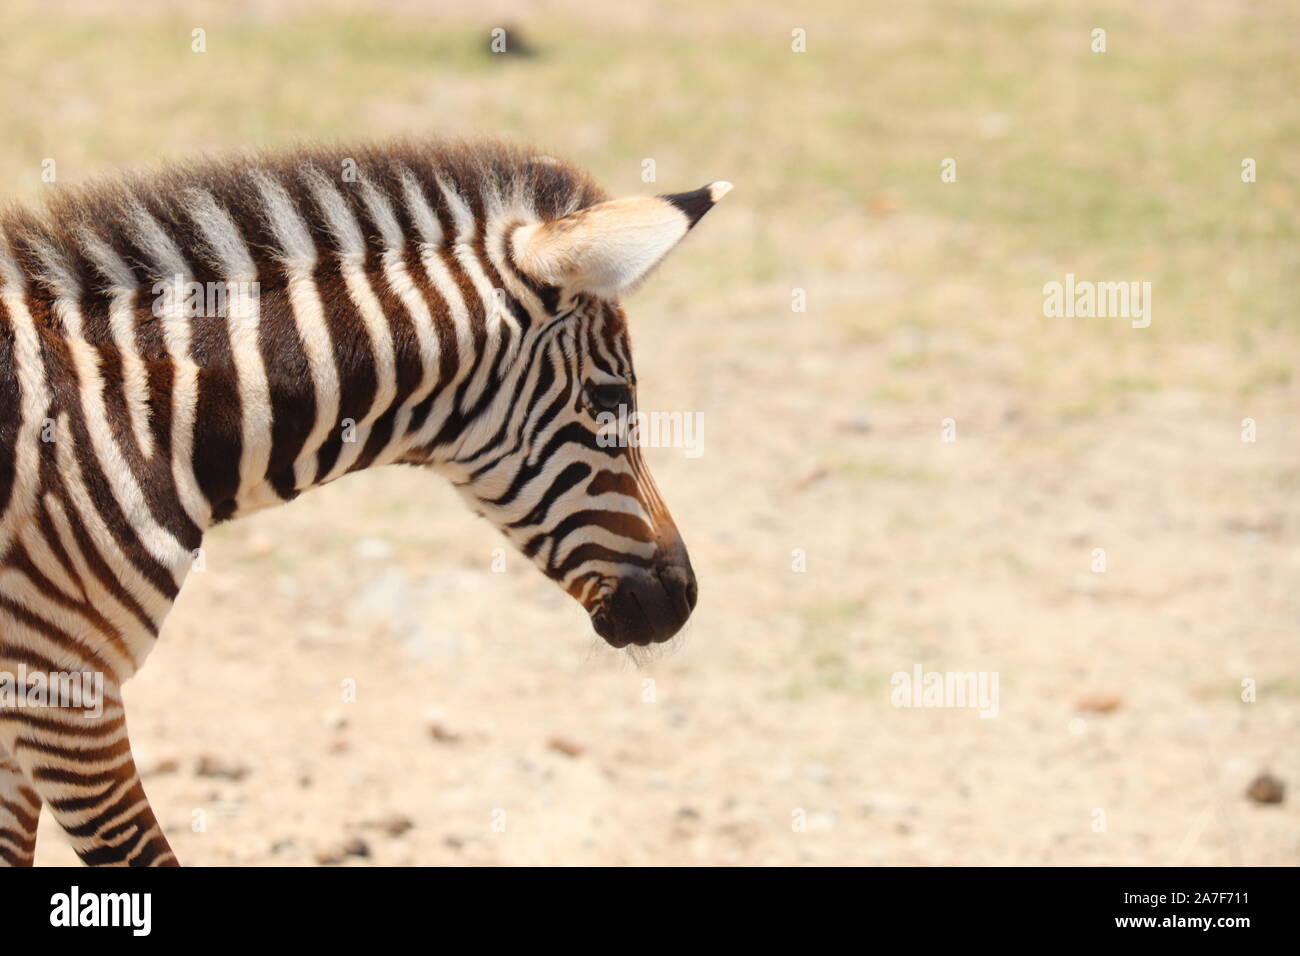 Zebras in the african savannah. Stock Photo